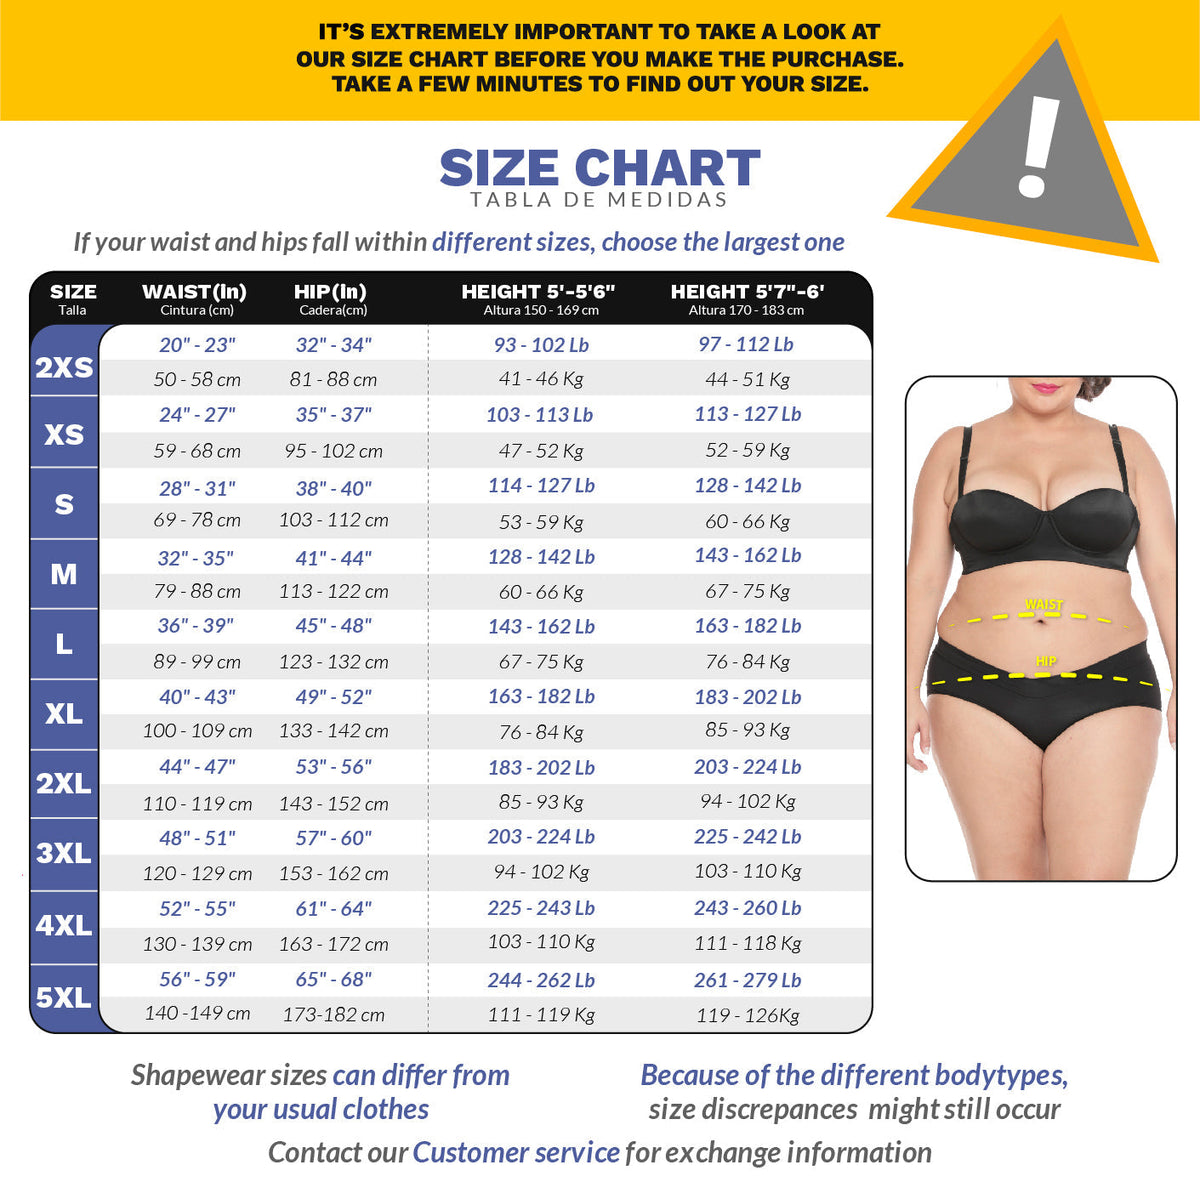 Slimming Bodysuit Colombian Faja | Open Bust Tummy Control body Shaper for Daily Use / Latex Diane & Geordi 002375